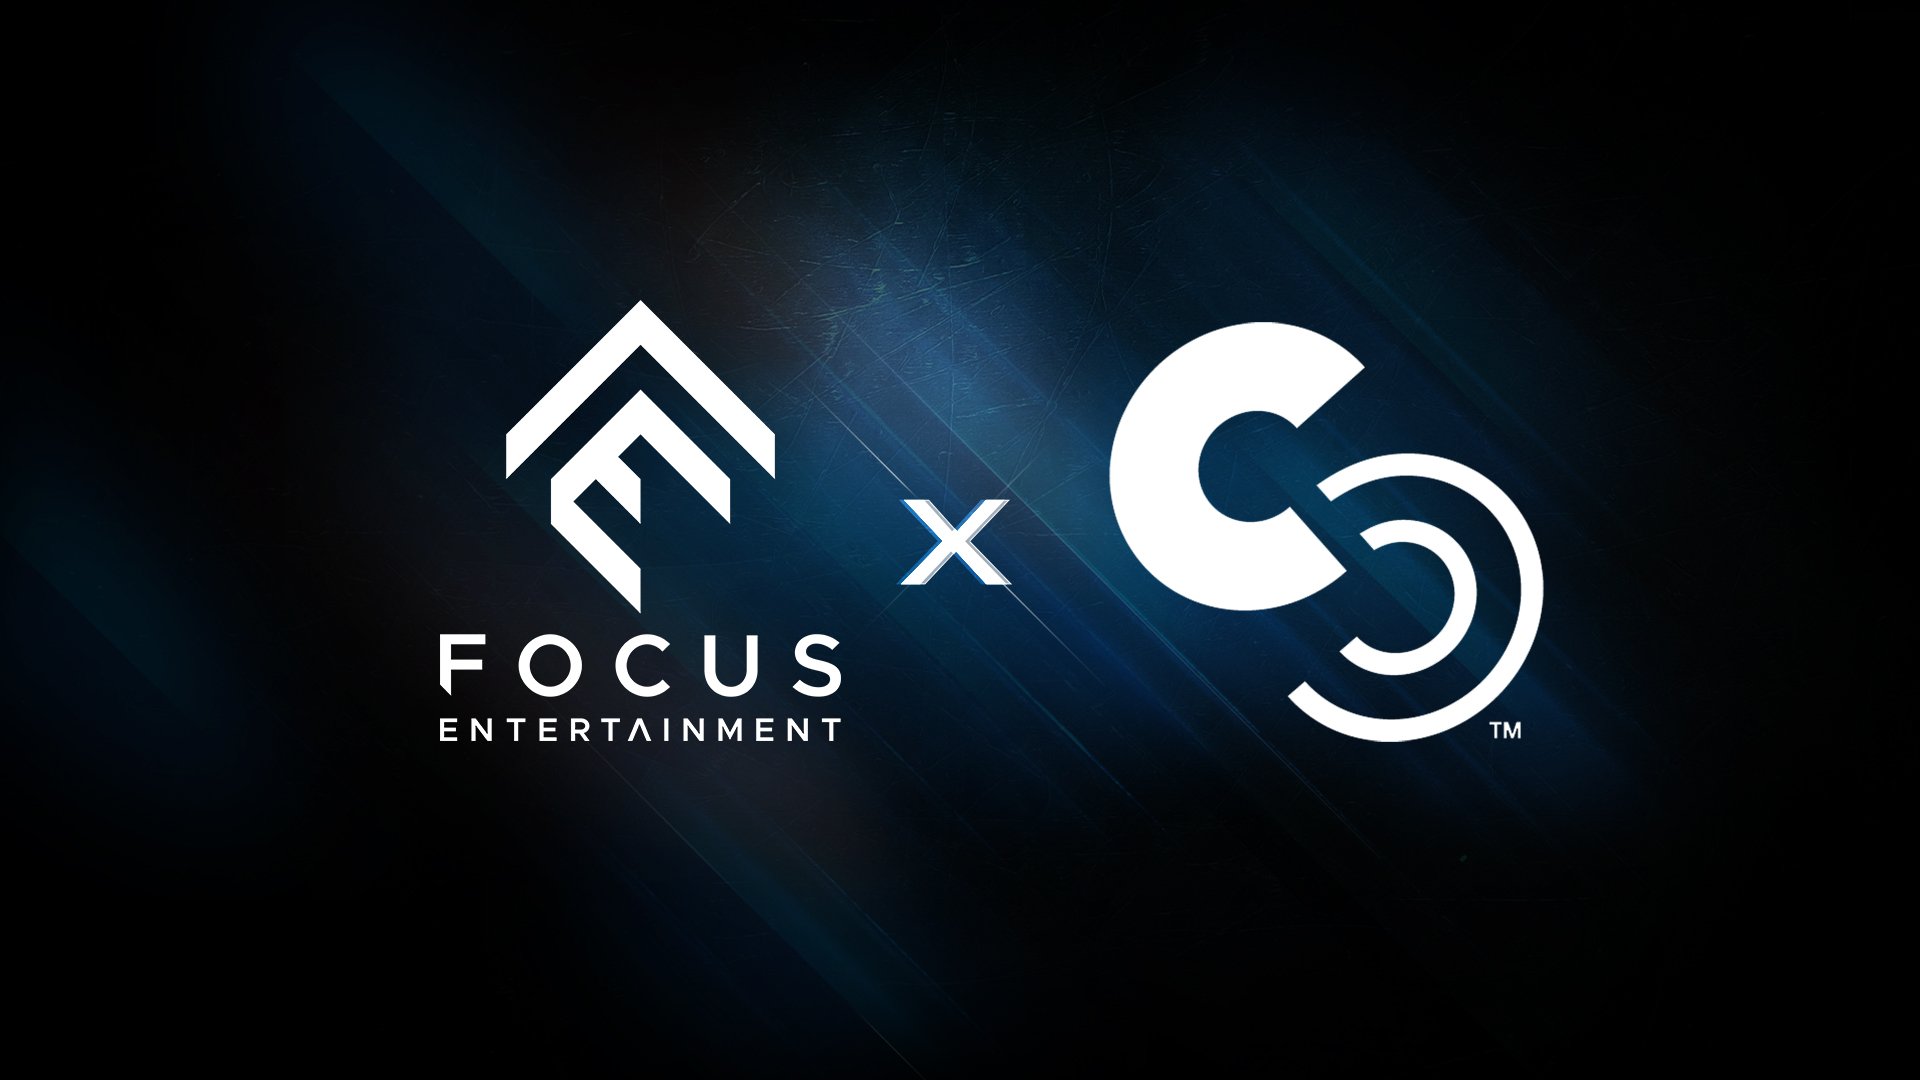 Focus Entertainment opens new Carpool Studio, consisting of Ubisoft veterans